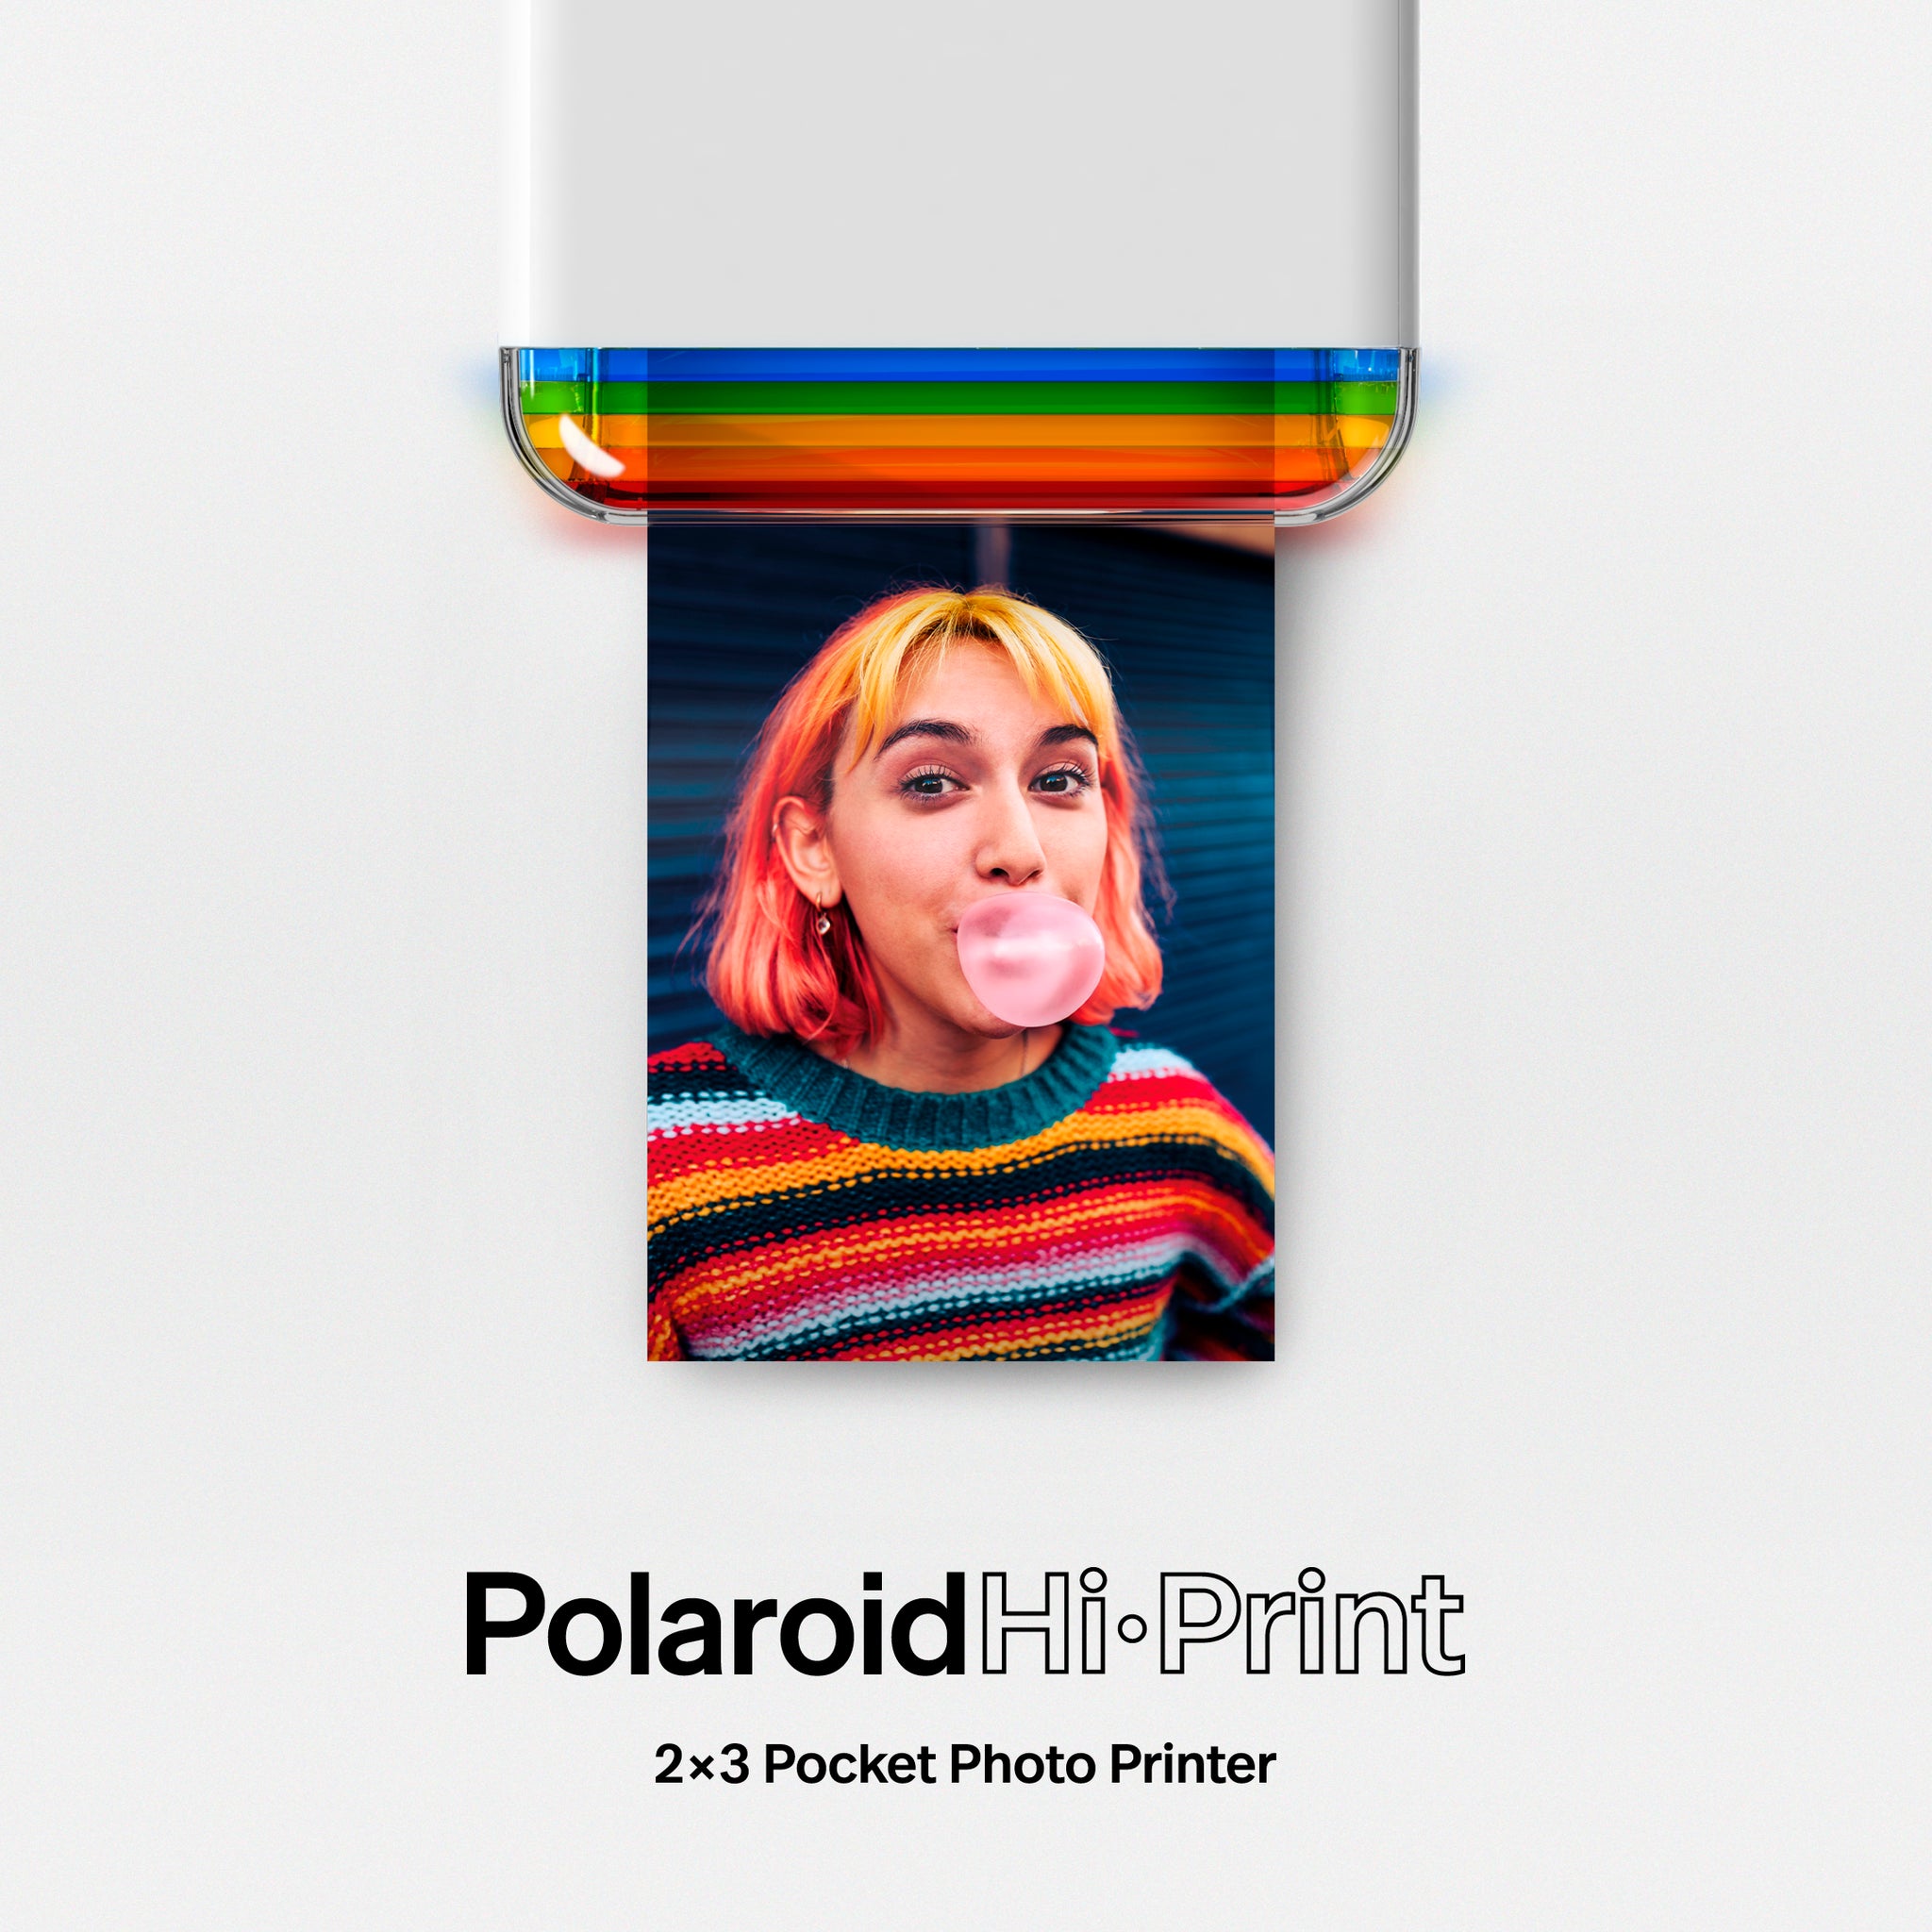 Polariod Hi-PRint